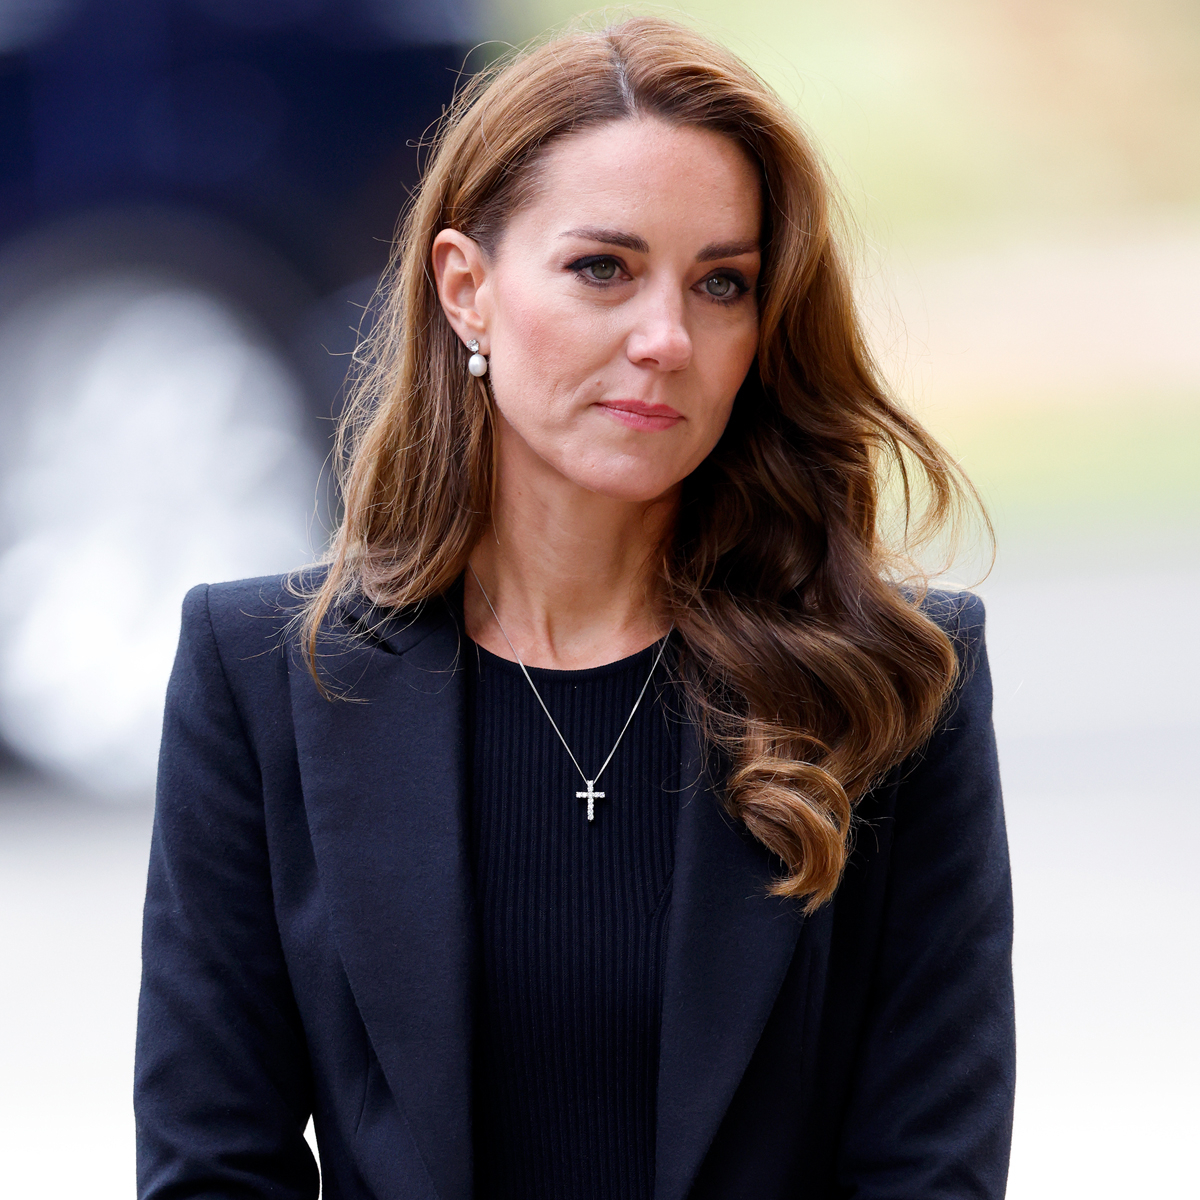 Kate Middleton starts preventative chemotherapy for cancer diagnosis